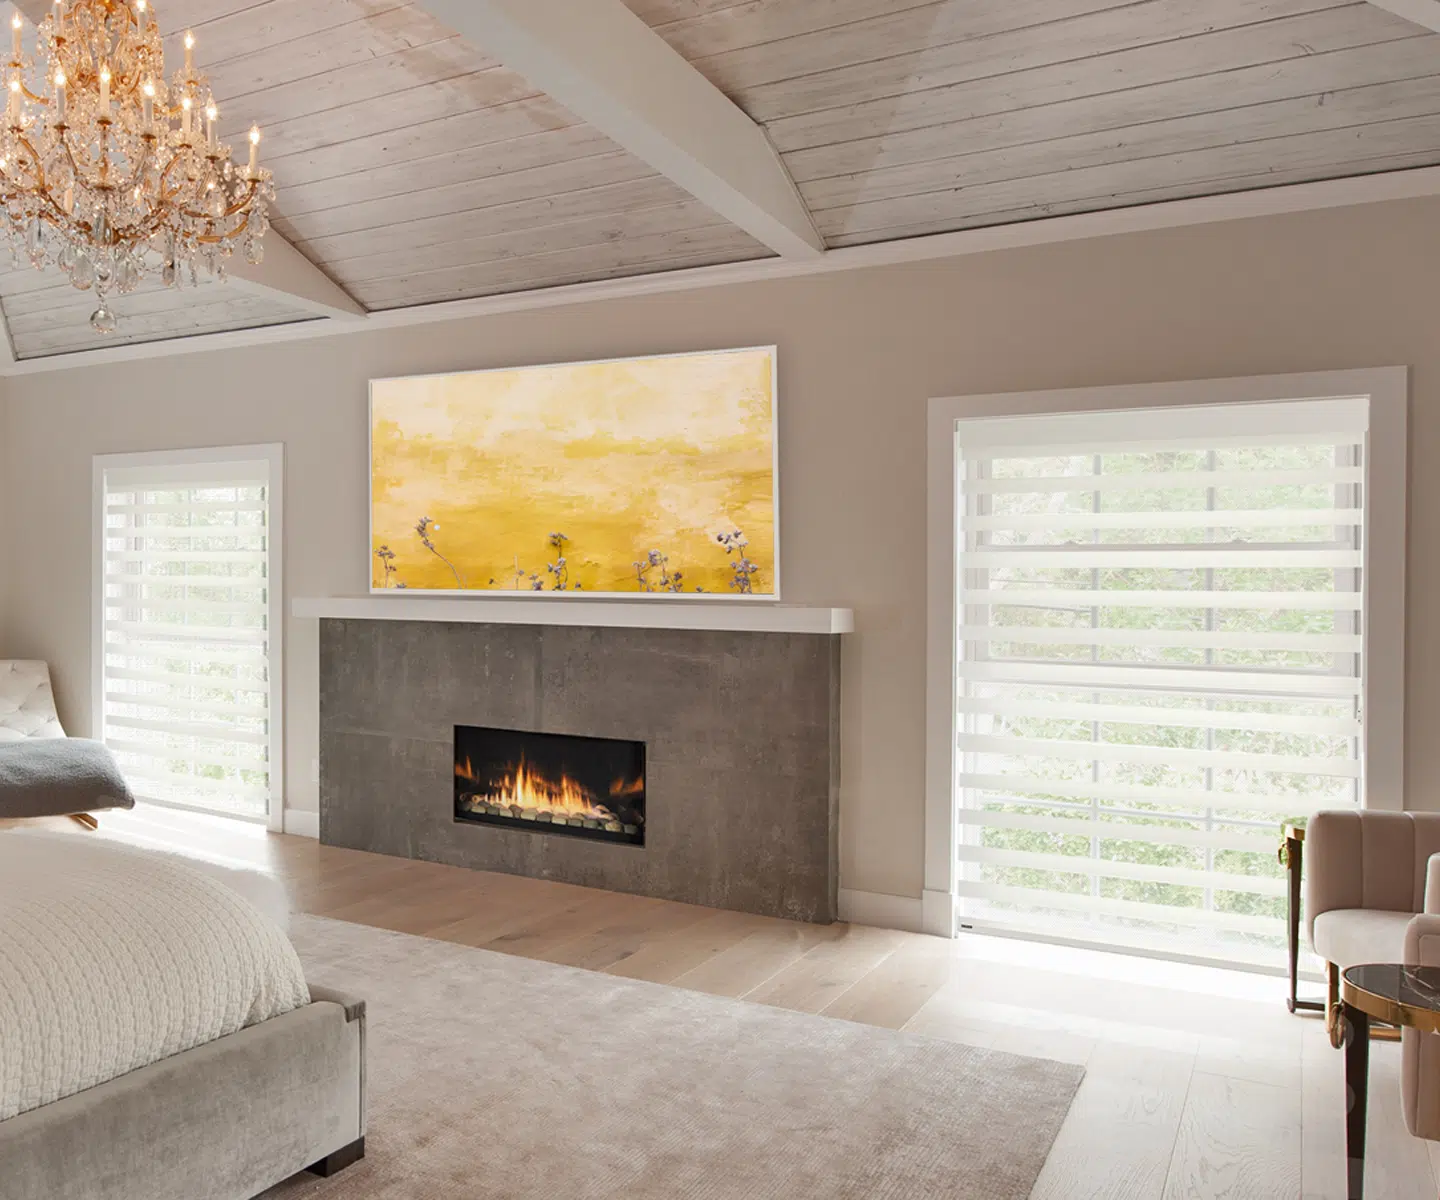 Located in Aldie, Va, a luxurious bedroom with elegant PerfectSheer shades